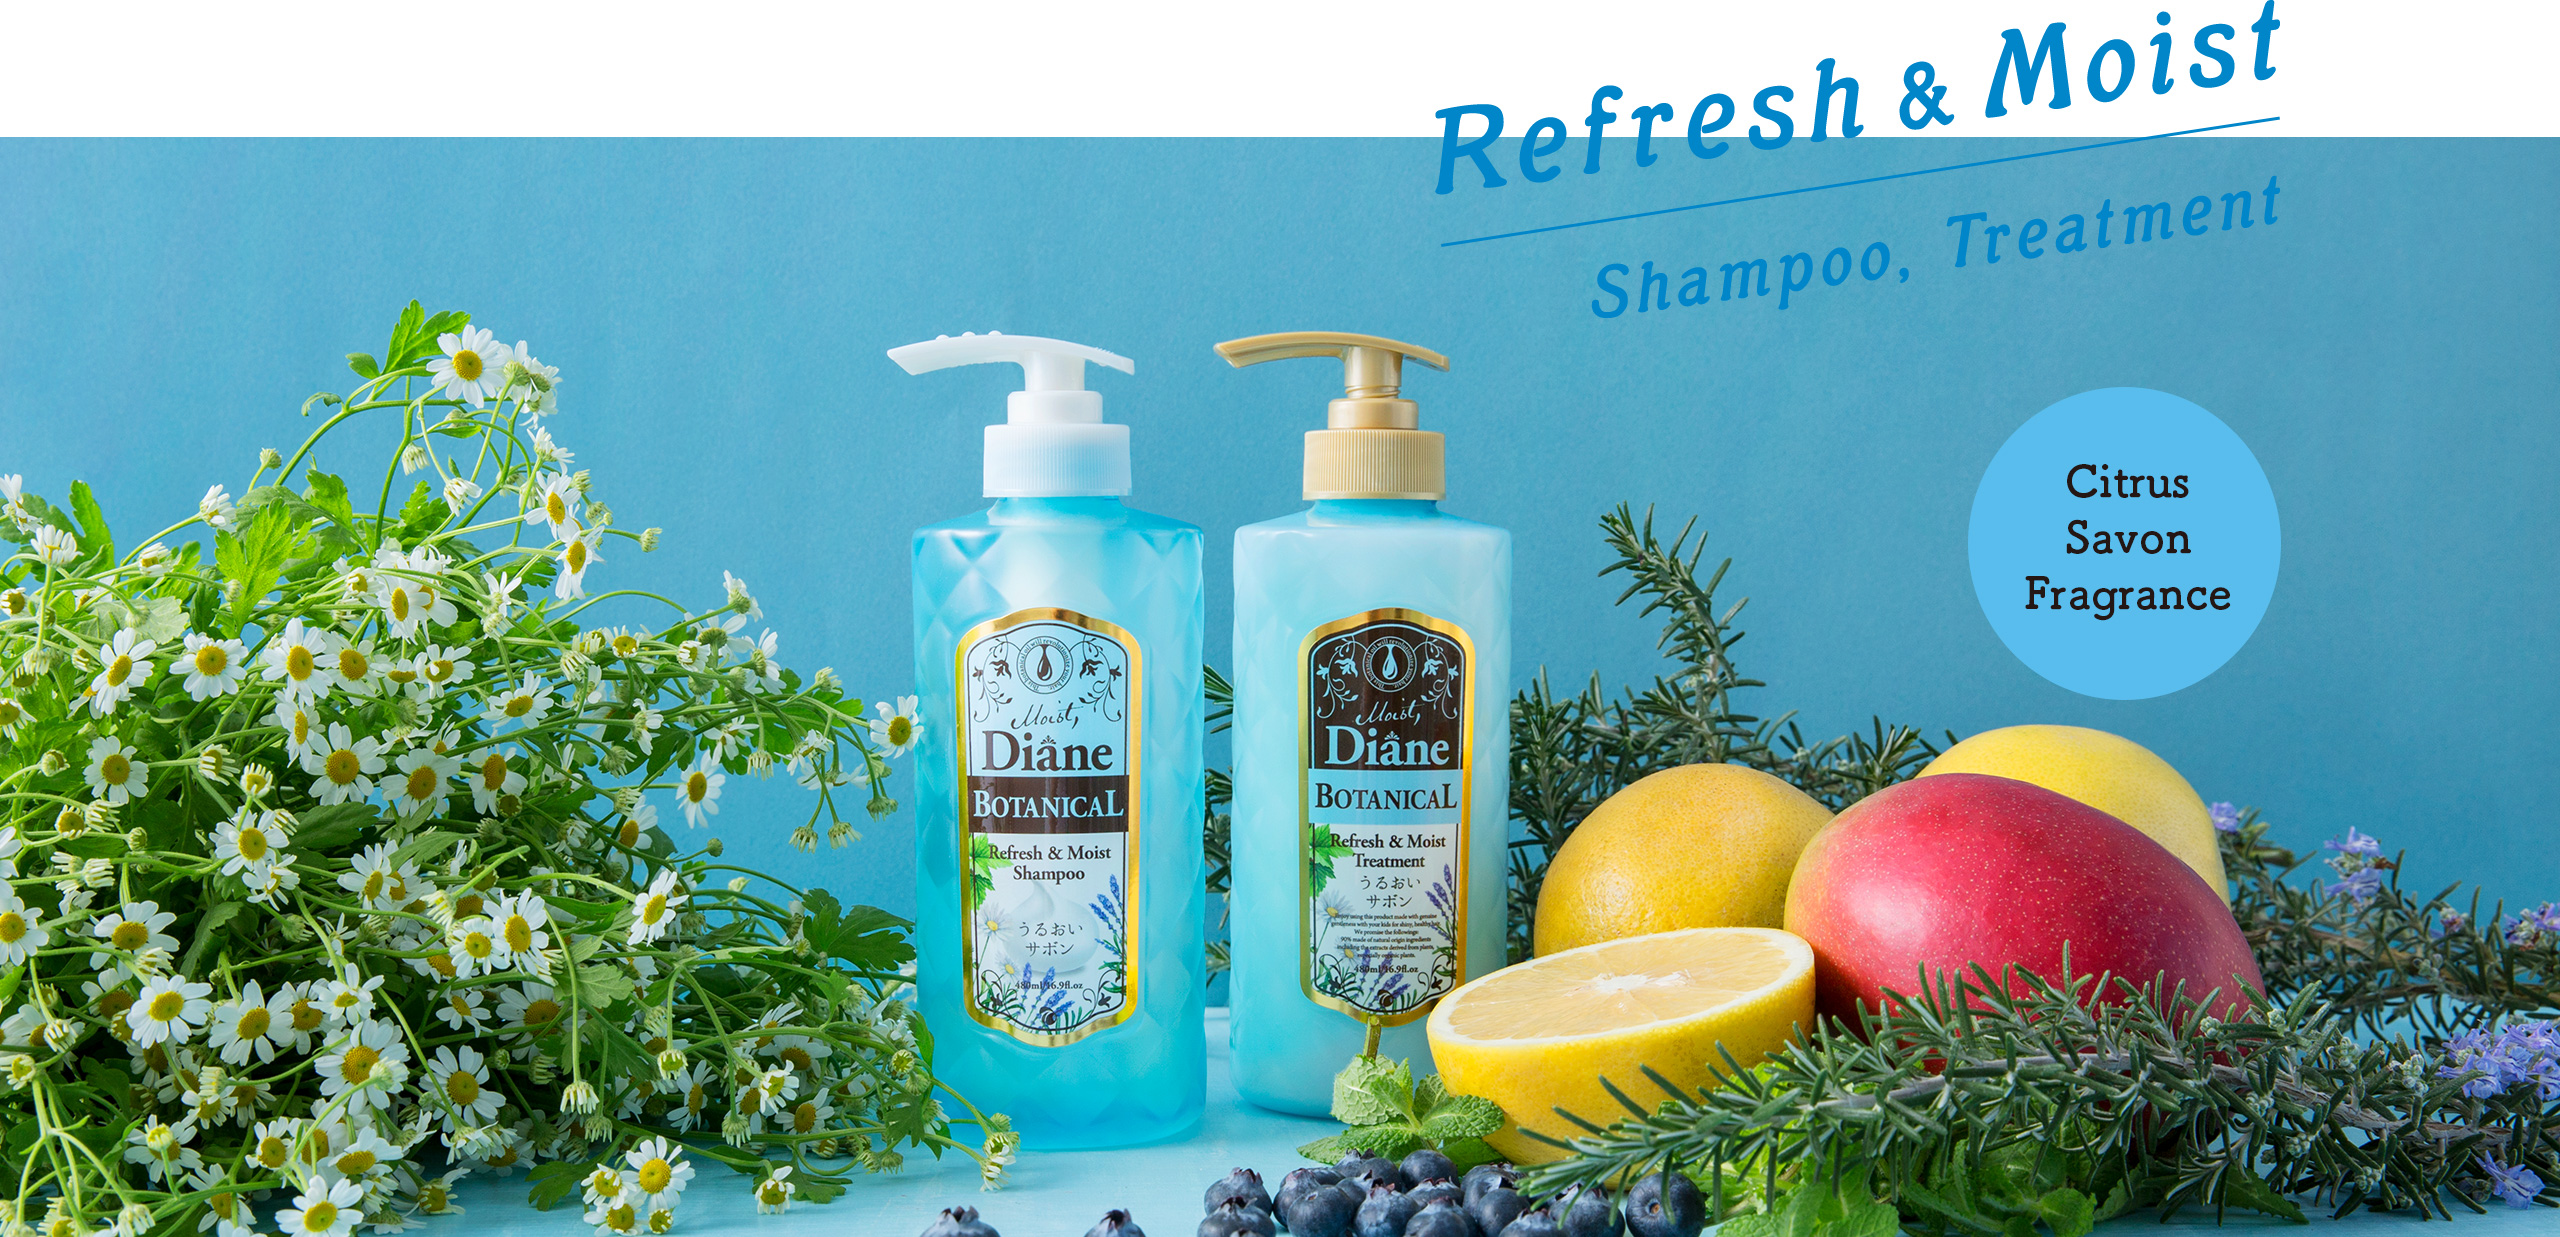 Refresh & Moist Shampoo, Treatment シトラスサボンの香り